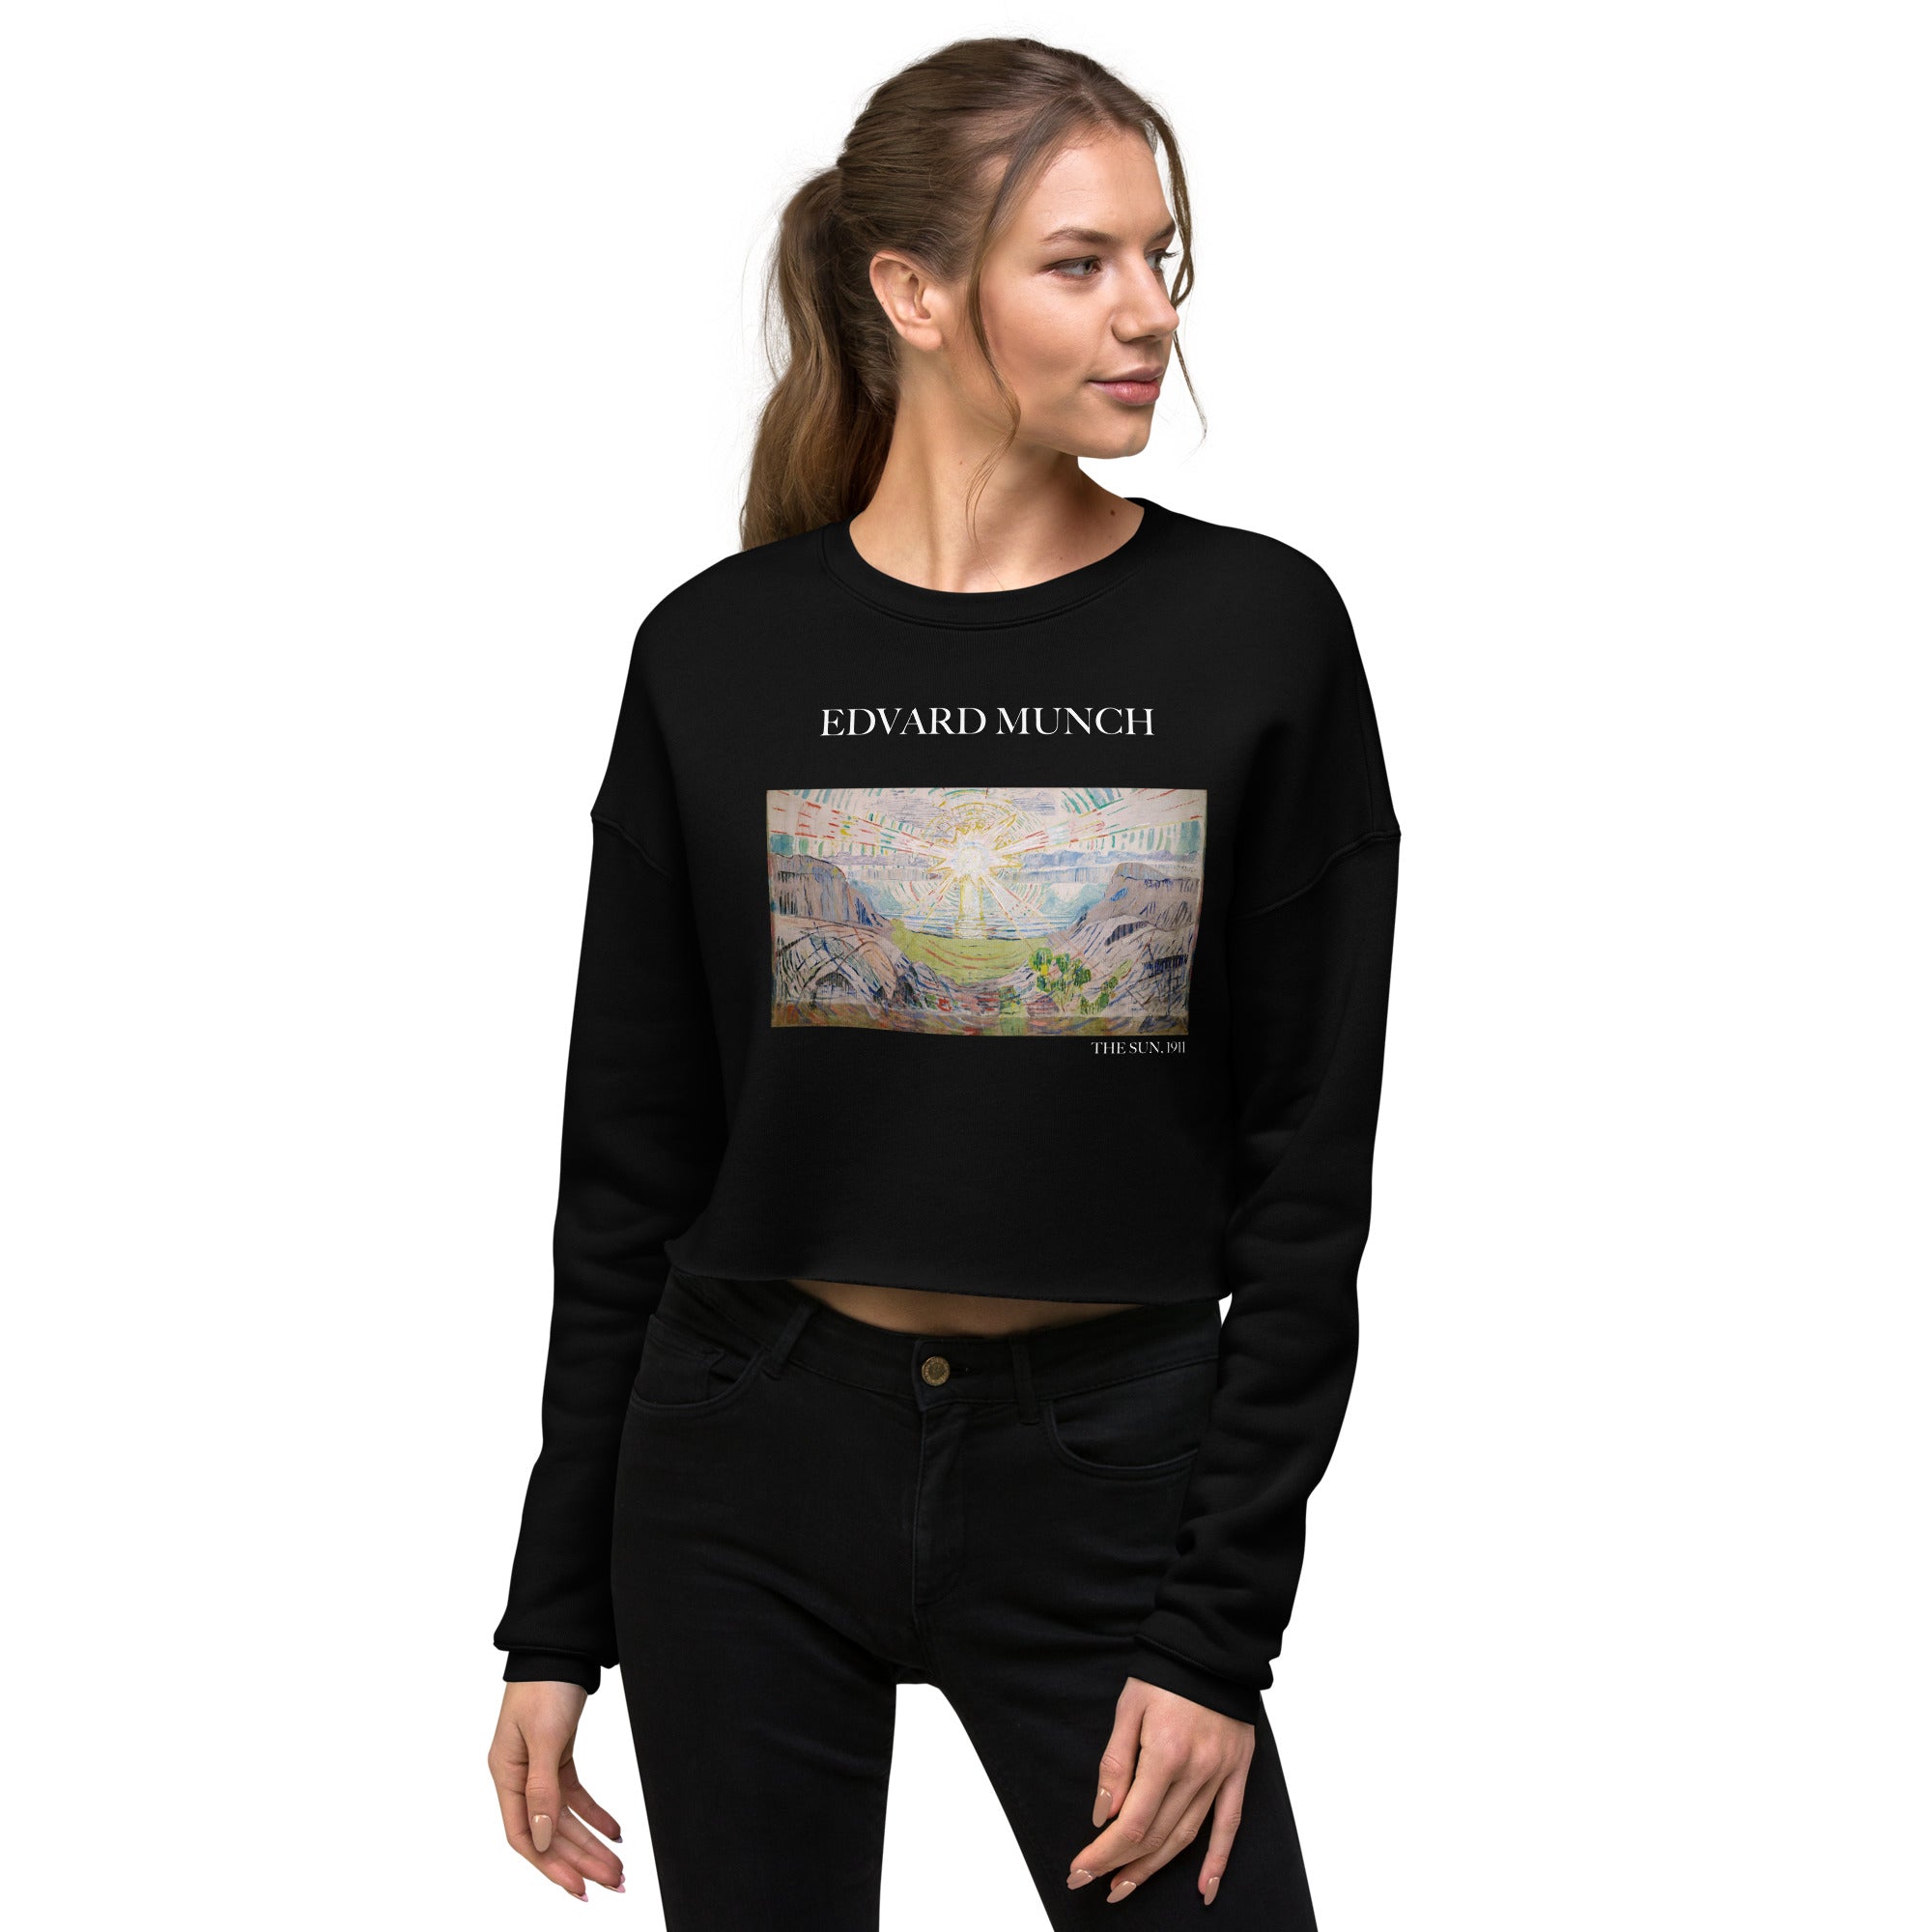 Edvard Munch 'The Sun' Famous Painting Cropped Sweatshirt | Premium Art Cropped Sweatshirt